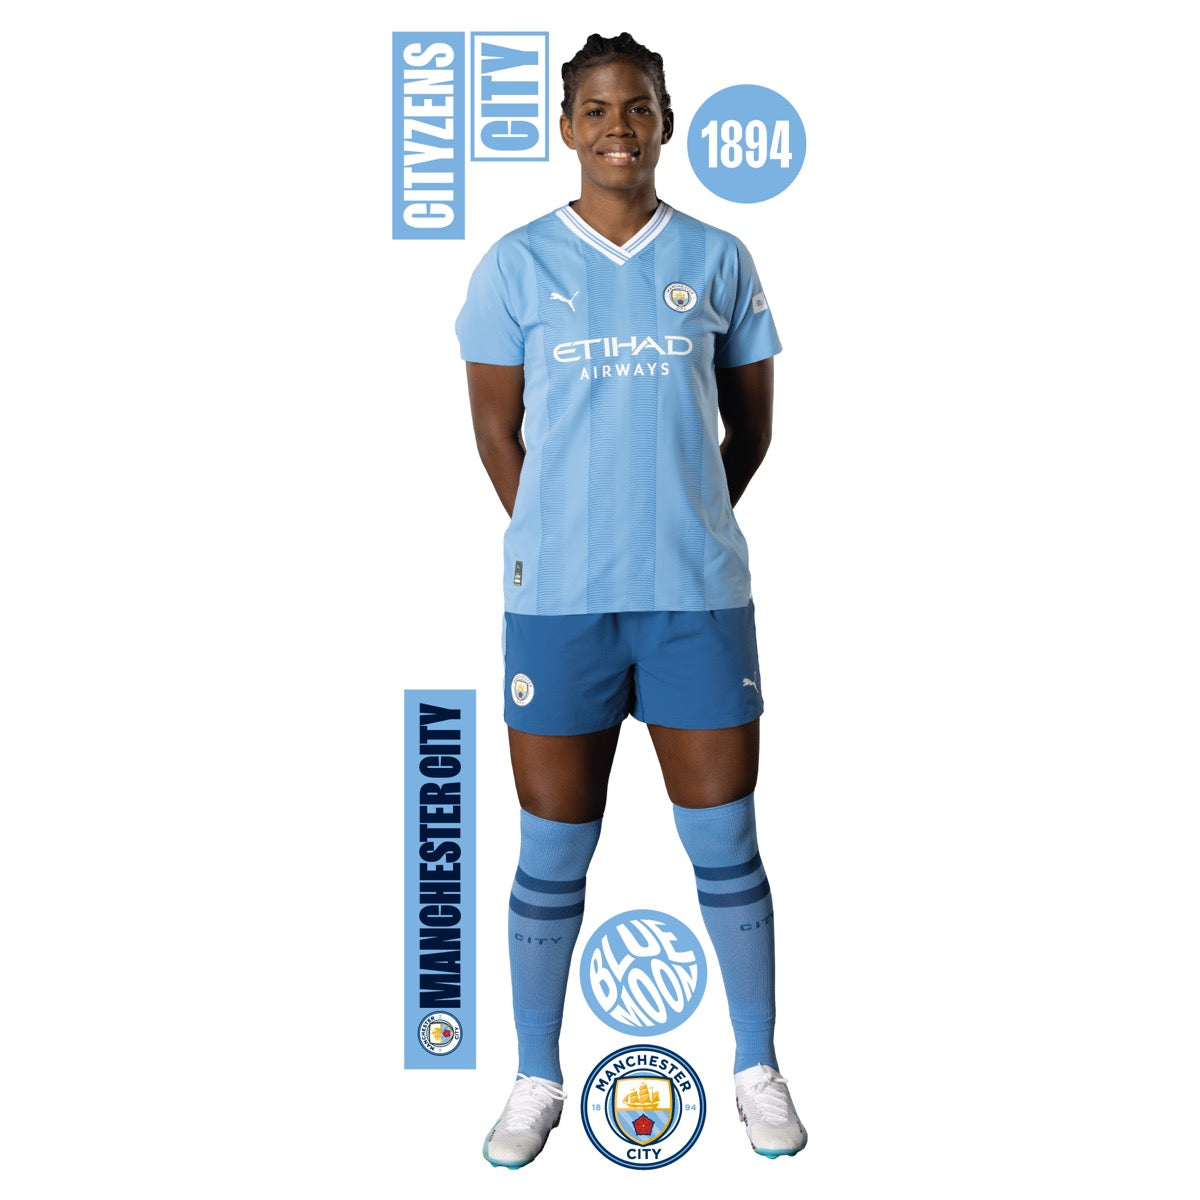 Manchester City Football Club - Bunny Shaw 23-24 Player Wall Sticker + Bonus Decal Set